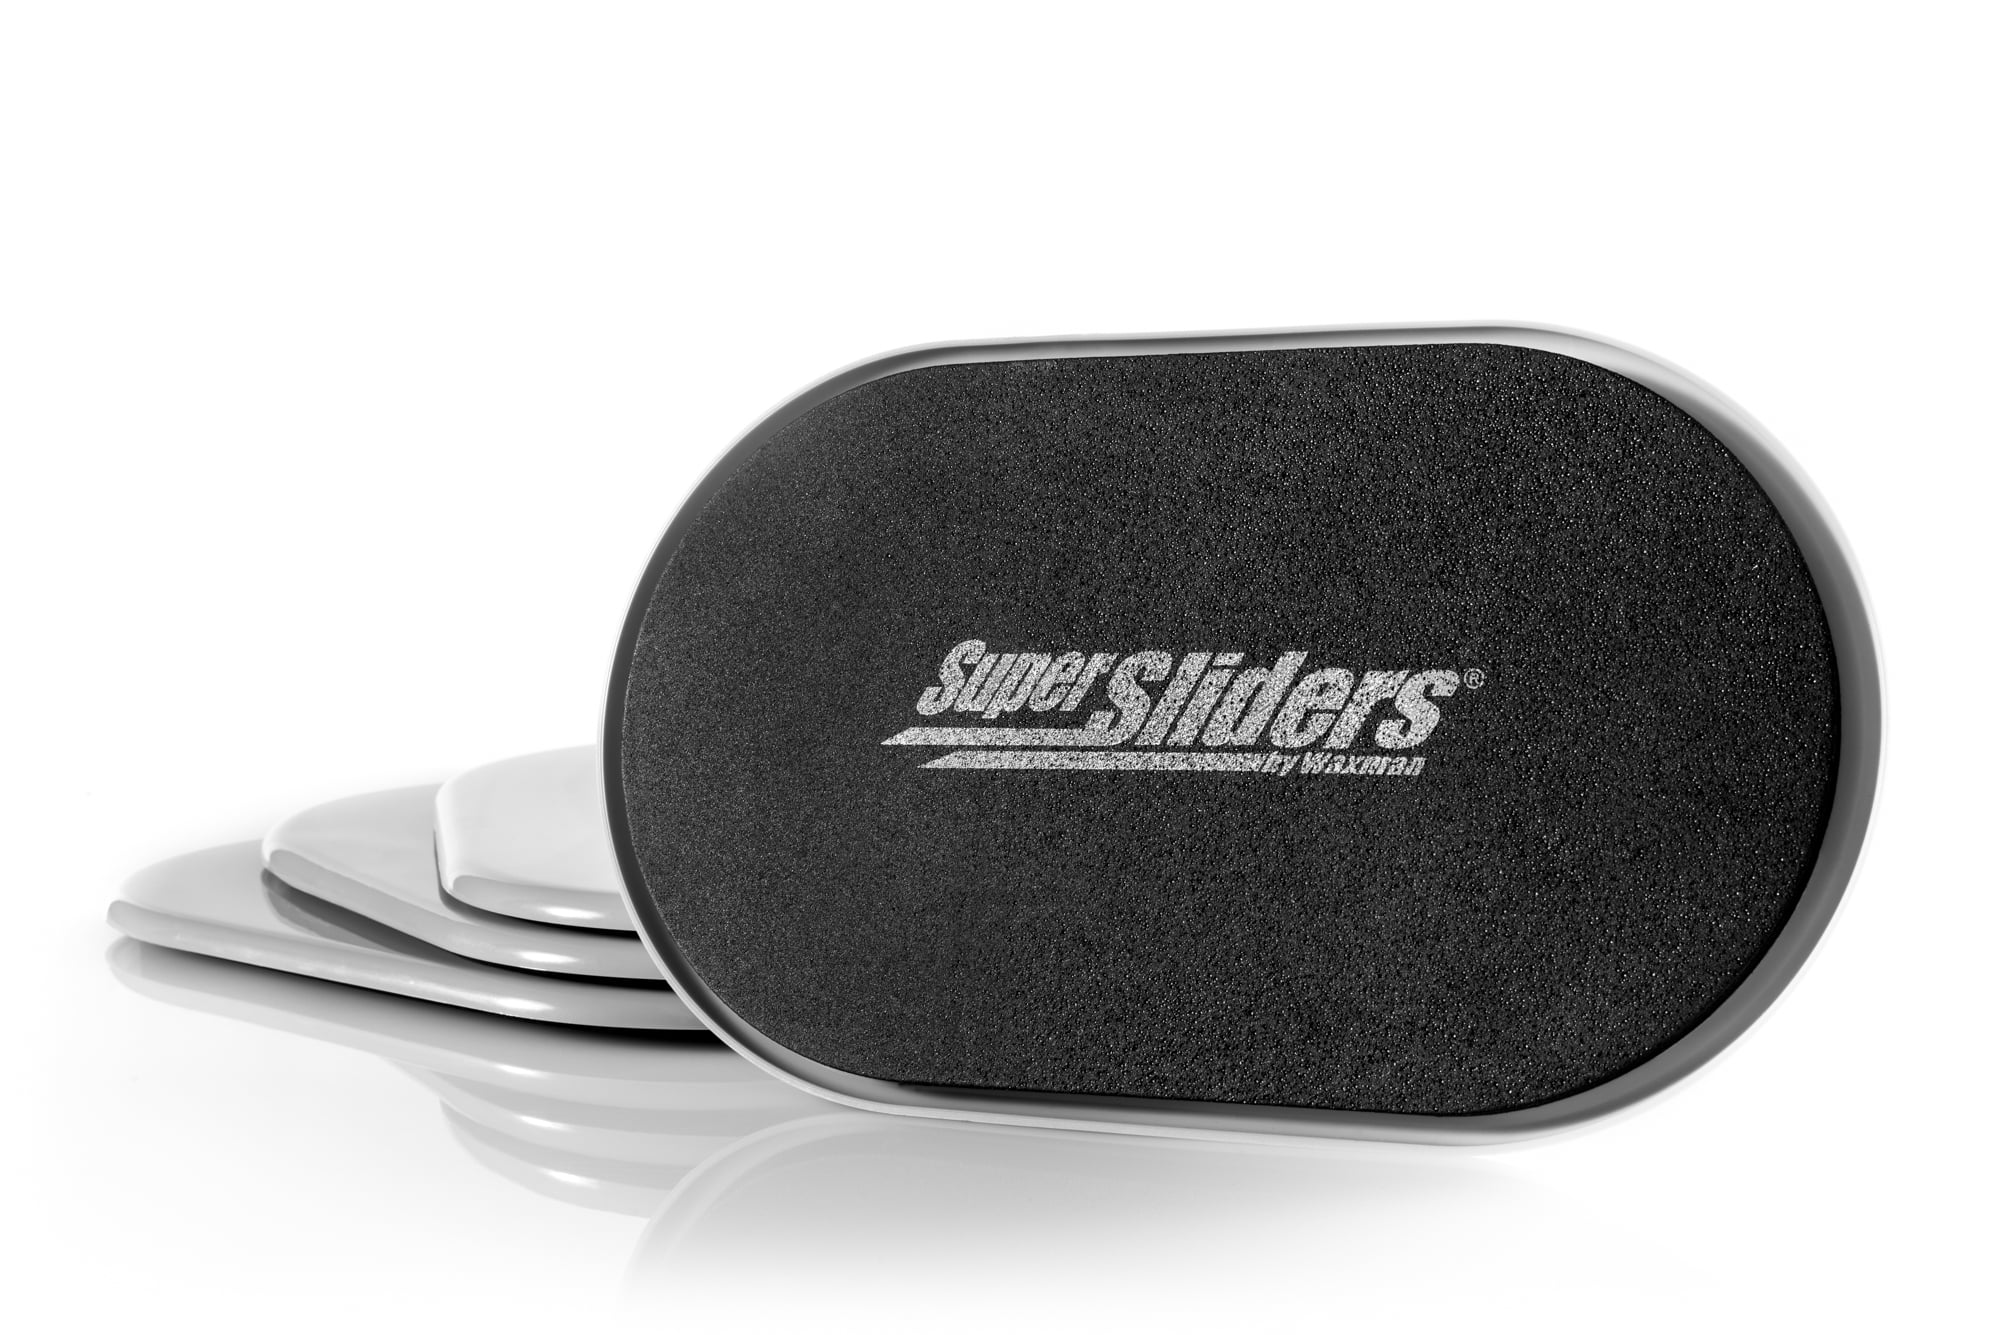 Super Sliders 4 PCS REUSABLE FURNITURE SLIDERS 9-1/2" x 5-3/4" CARPETED SURFACES